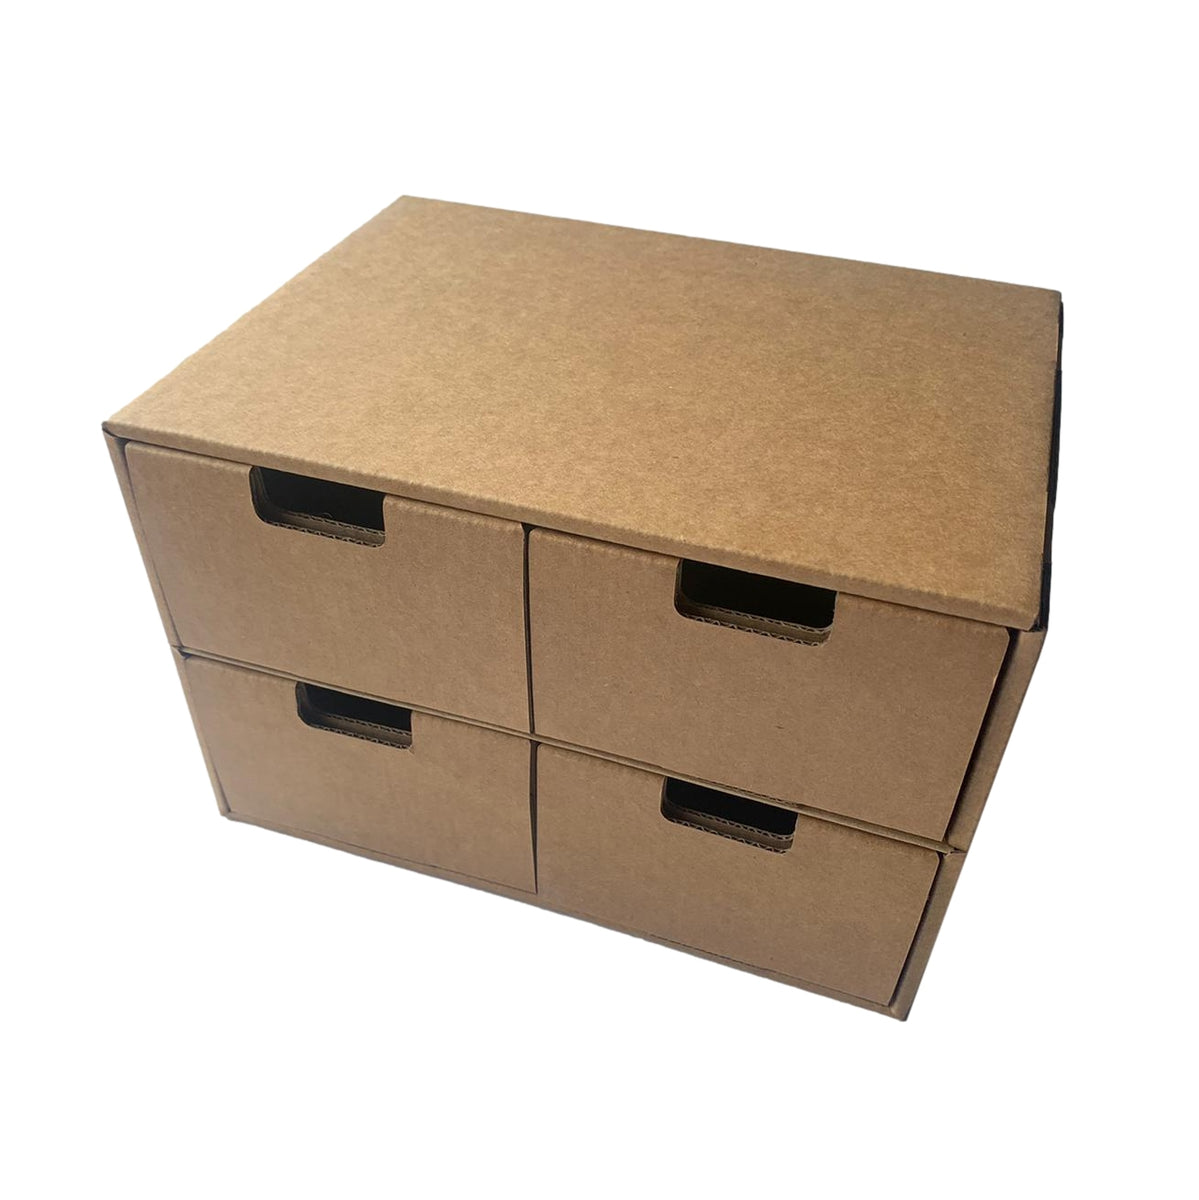 🗃️ storage box DIY, how to make a storage box